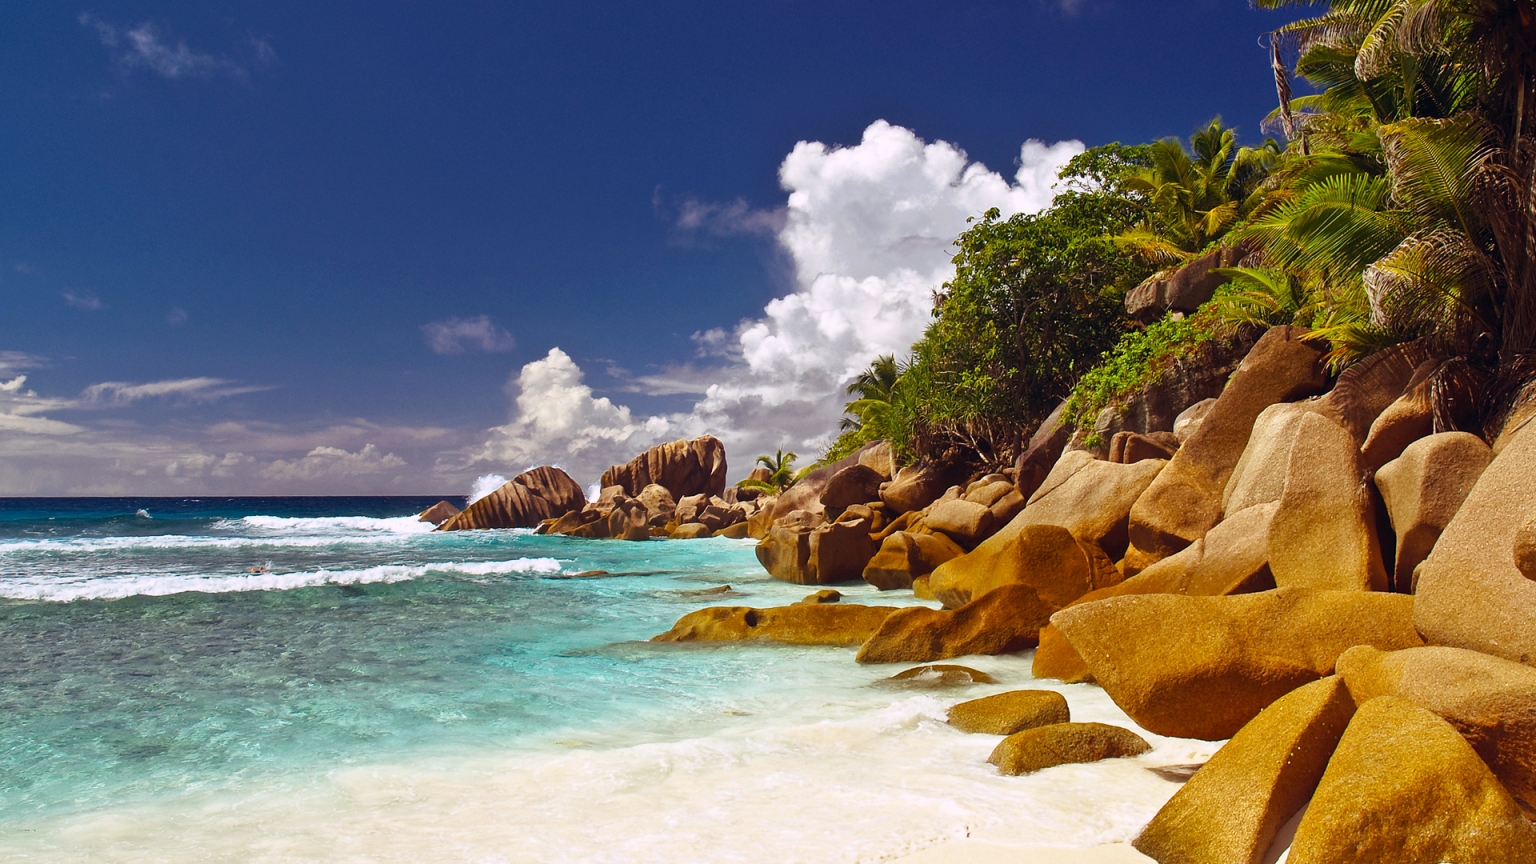 Seychelles Islands Corner for 1536 x 864 HDTV resolution